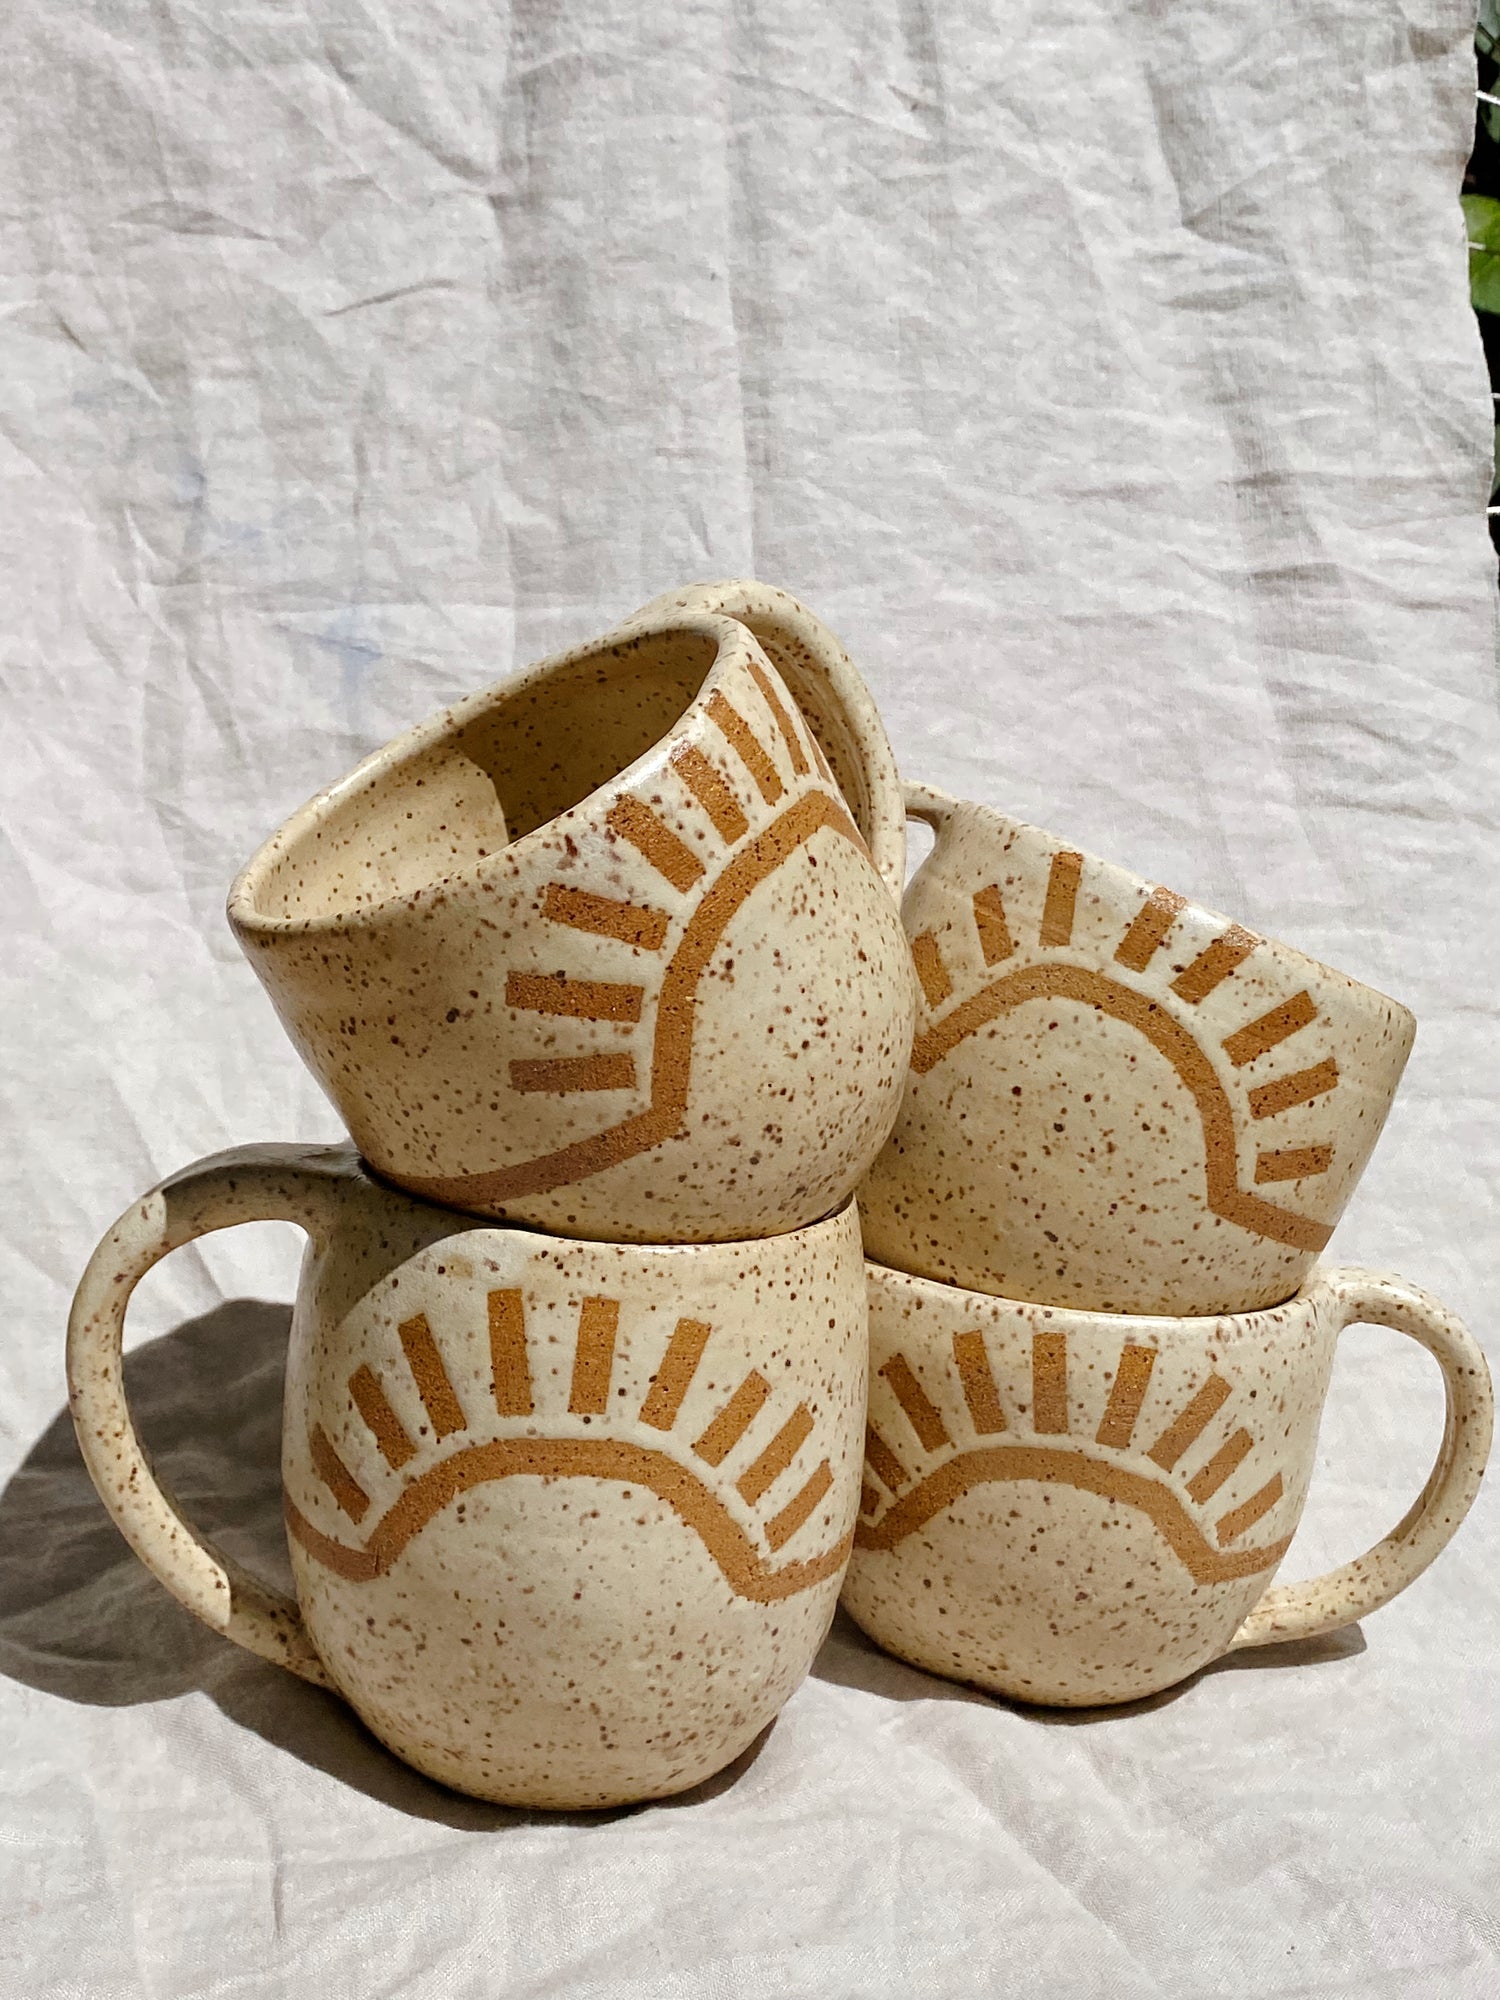 homemade ceramics made in santa cruz, mug with sunshine on them